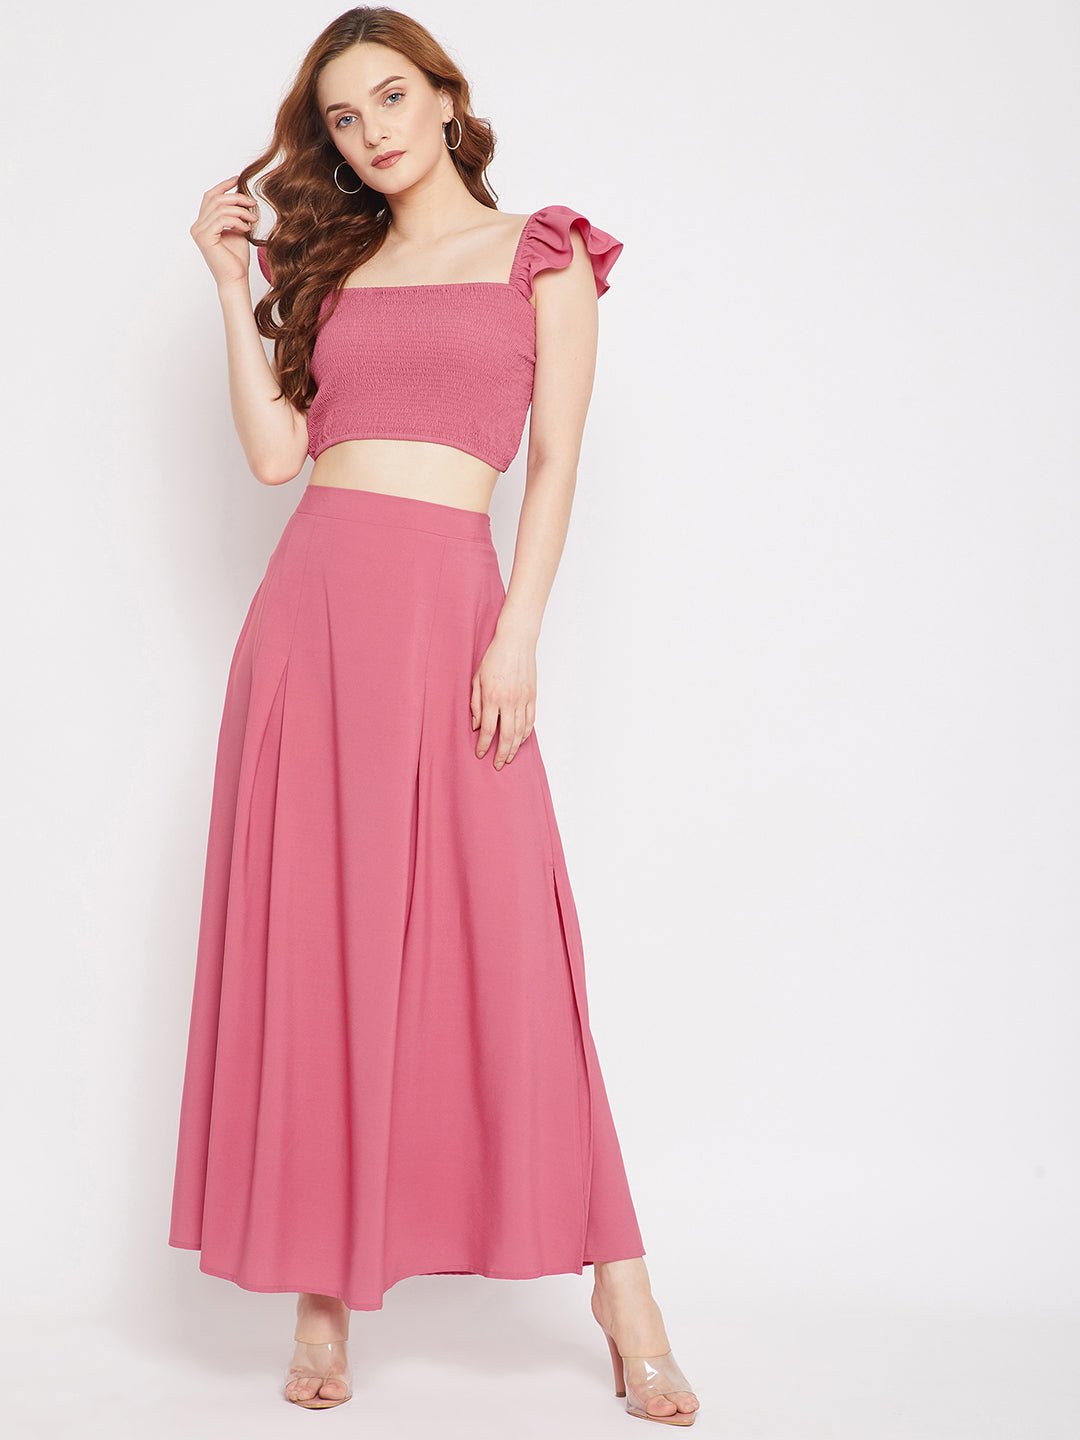 Folk Republic Women Solid Pink Square Neck Crepe Smocked Co-Ordinate Maxi Dress - #folk republic#